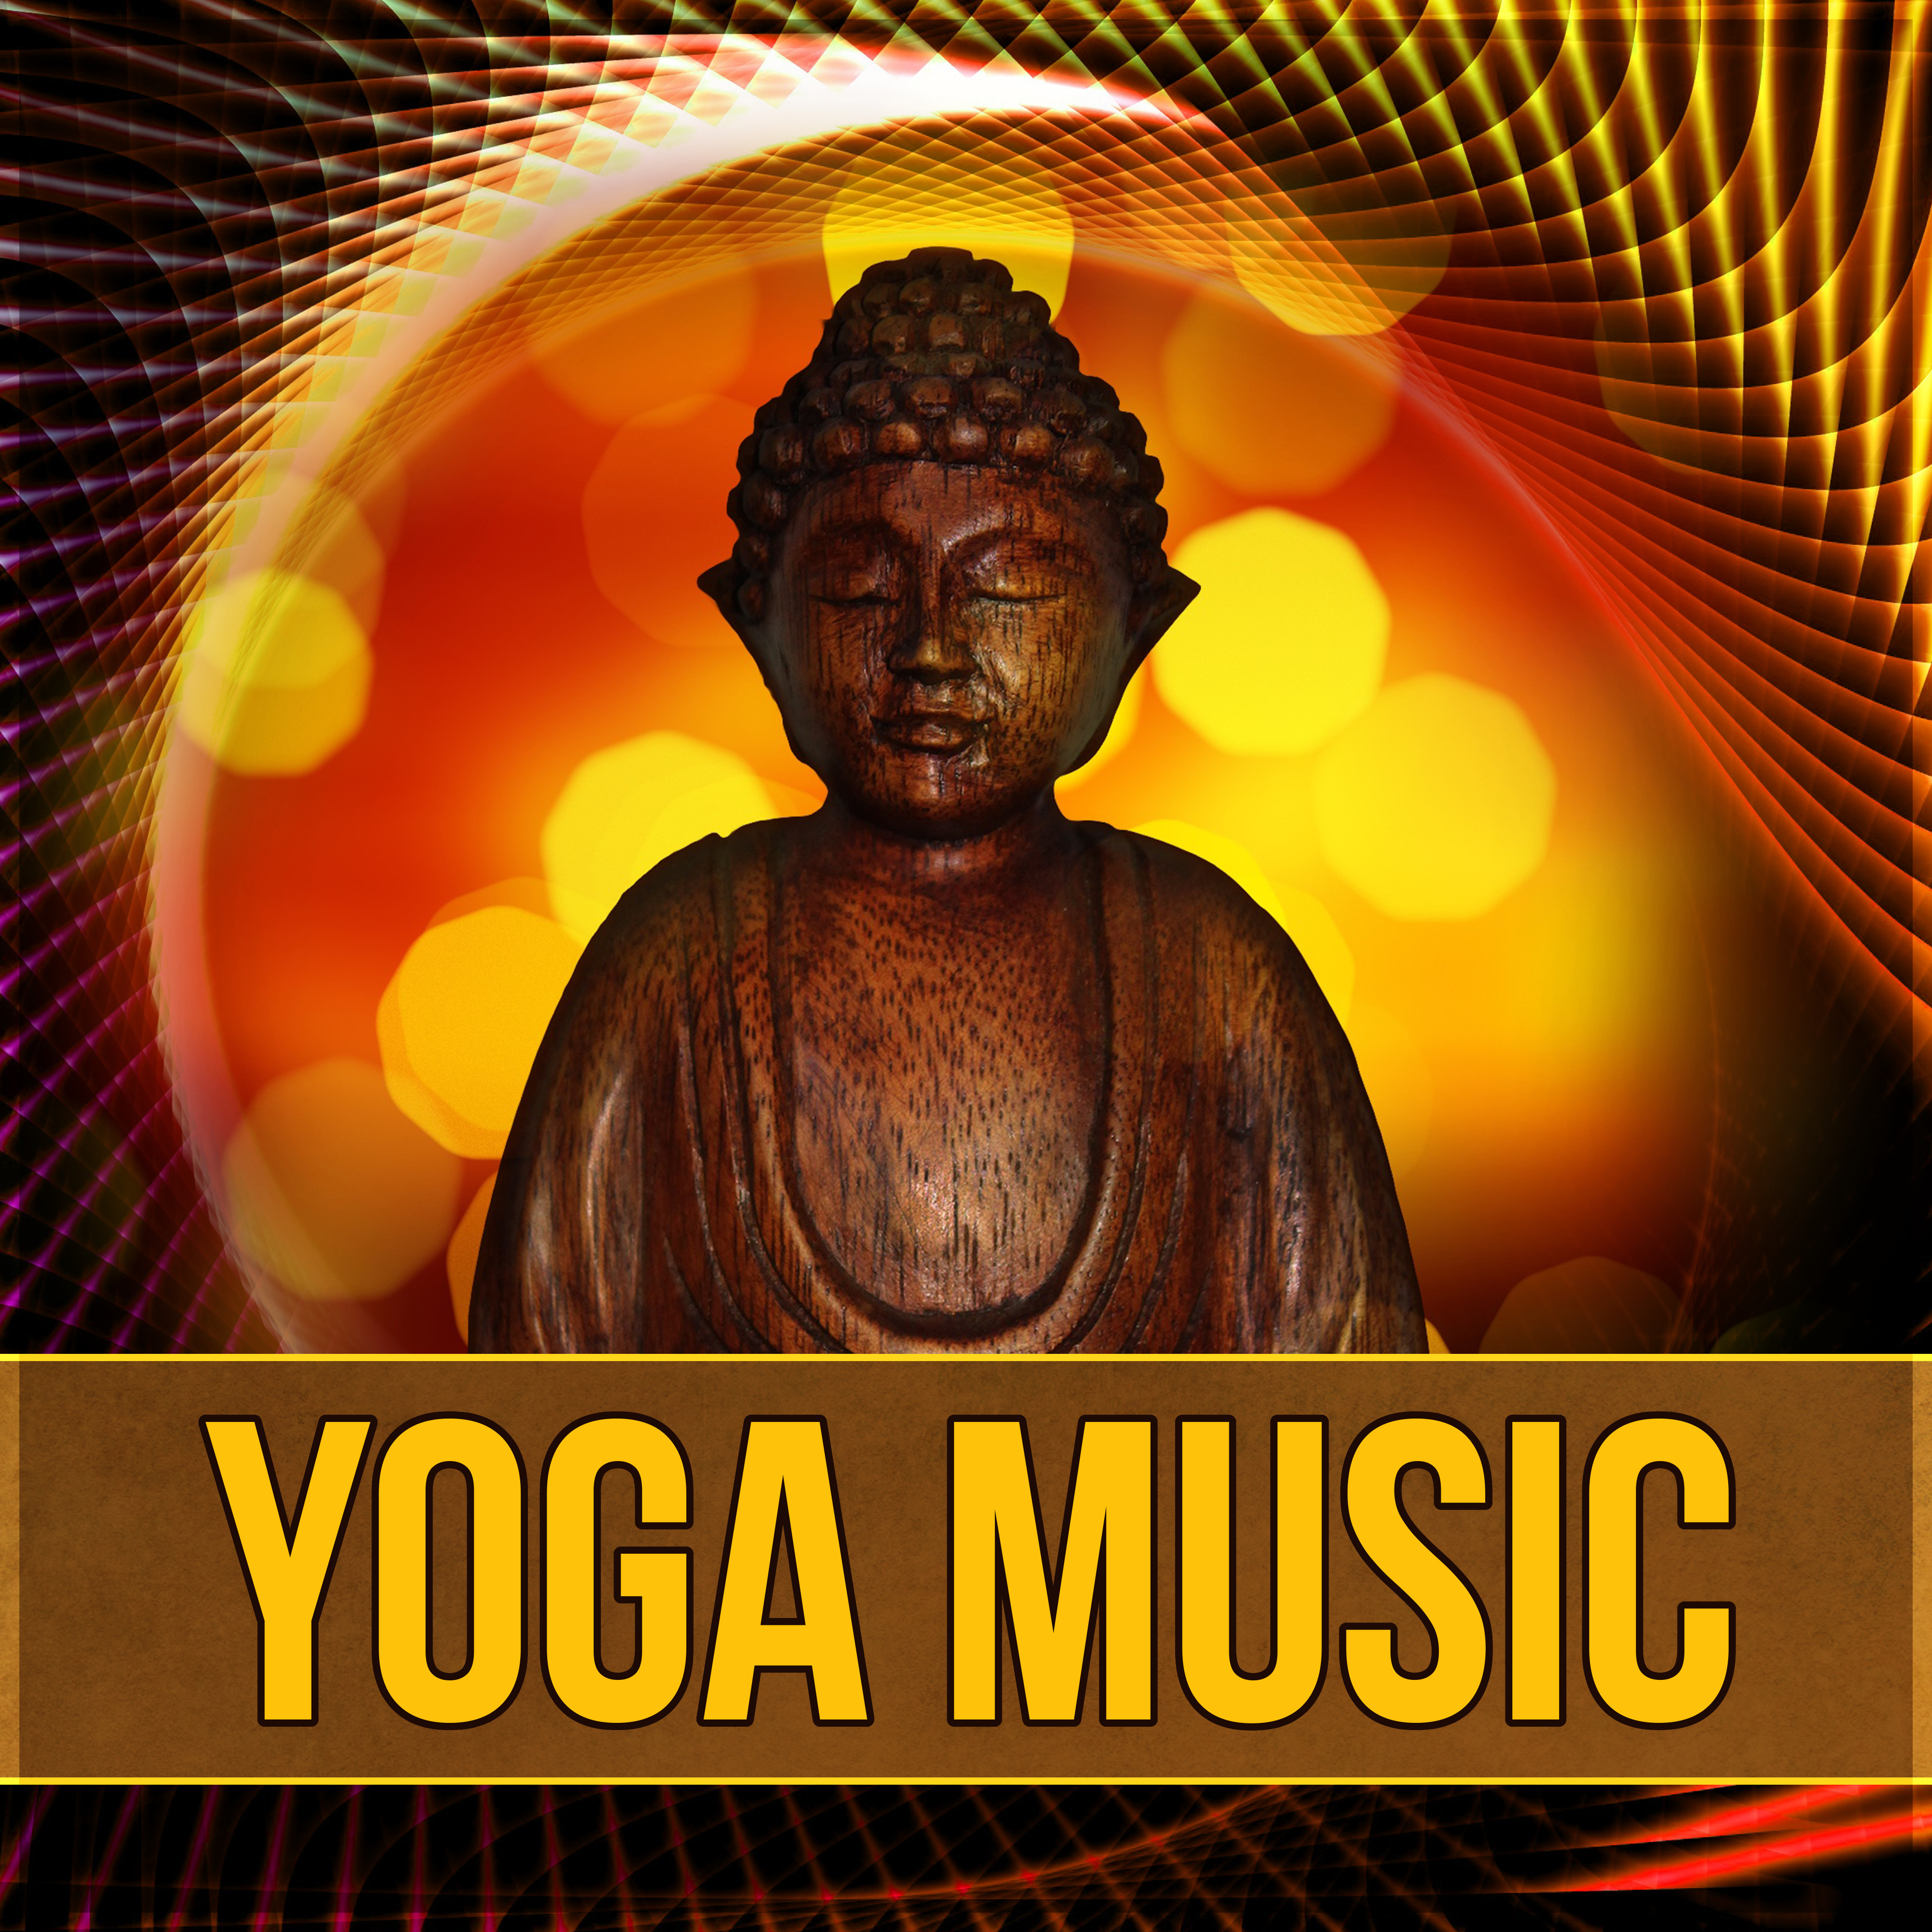 Yoga Music  Chakra Healing, Pranayama, Hatha Yoga, Mantras, Mindfulness, Relaxation, Sleep Meditation, Massage, Wellness, Spirituality,